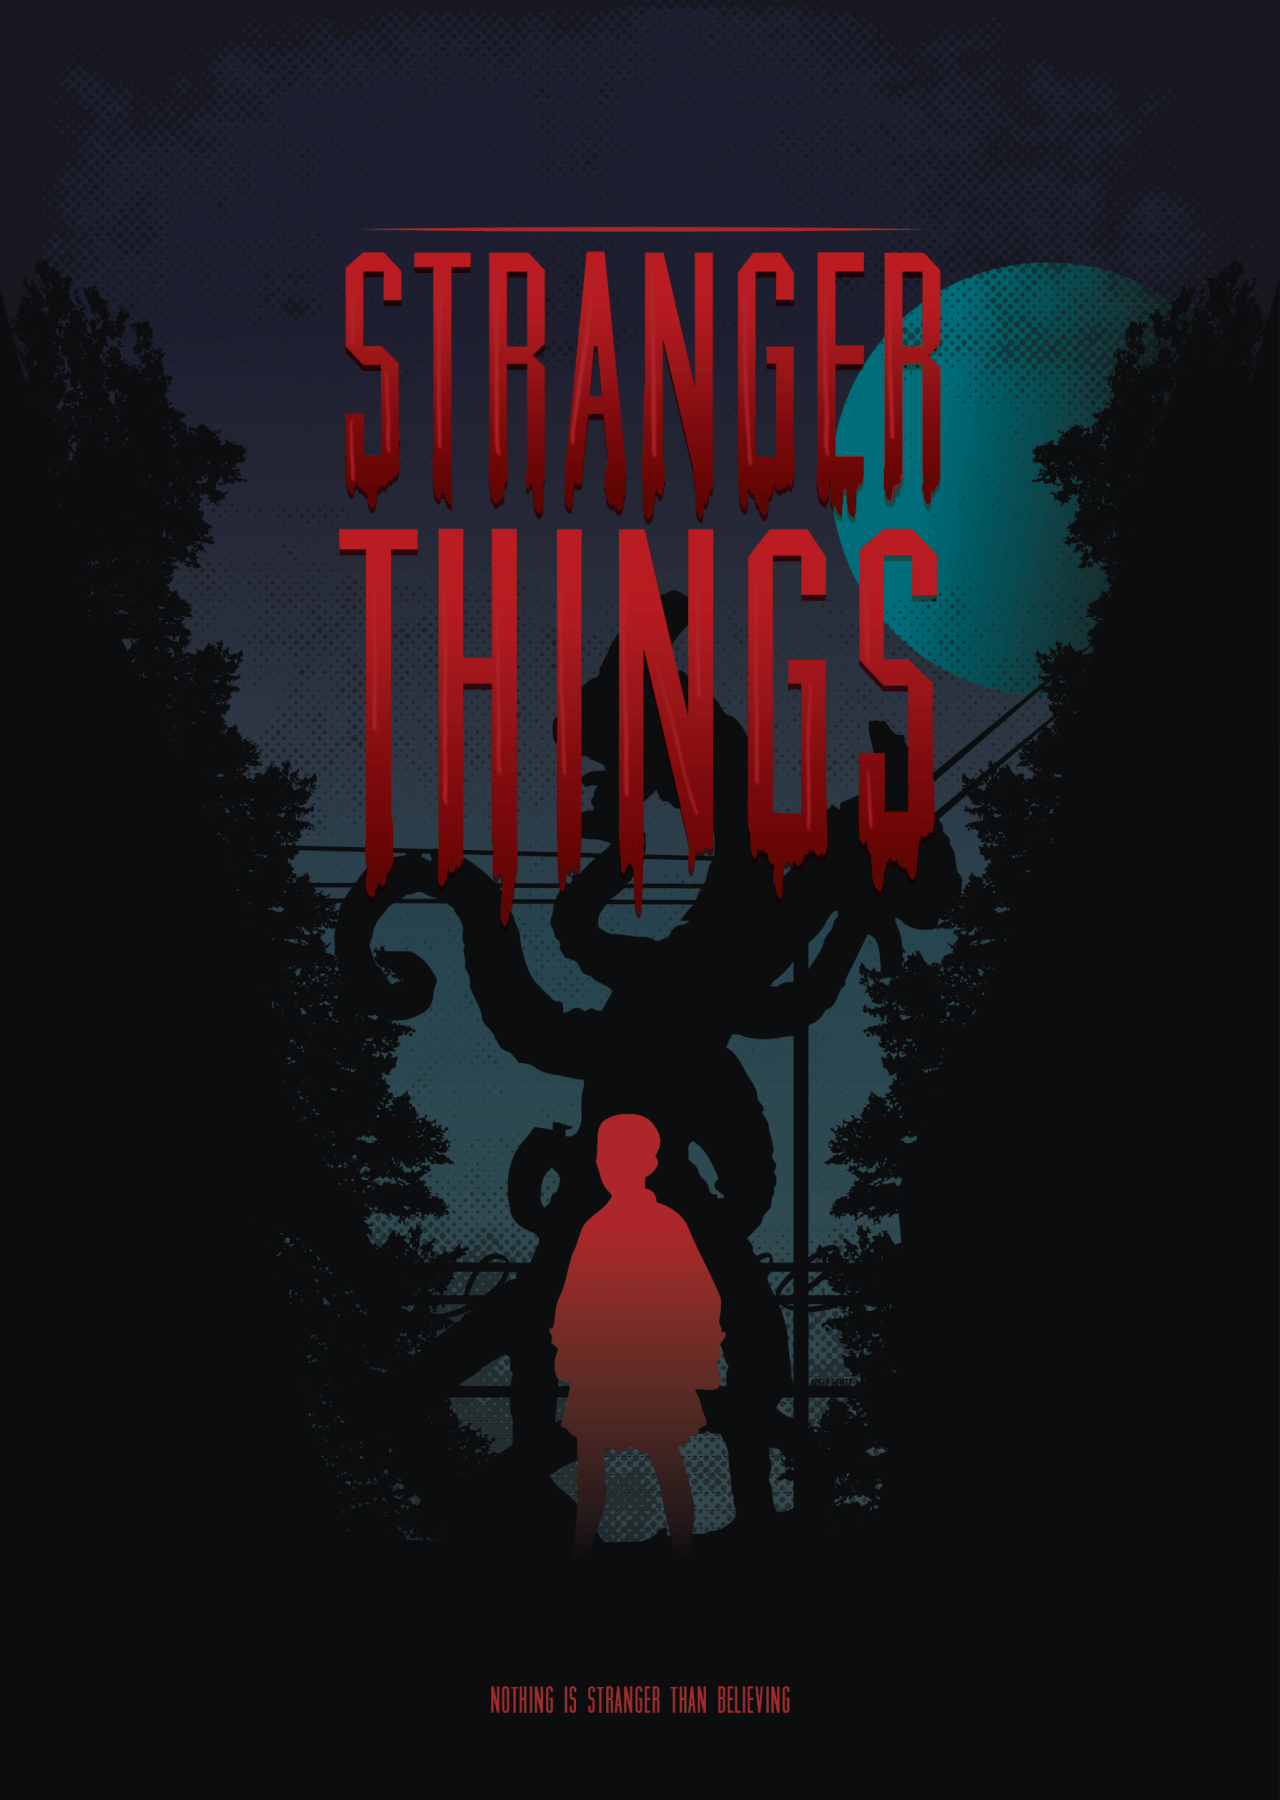 Stranger Things Aesthetic Desktop Wallpapers - Top Free Stranger Things